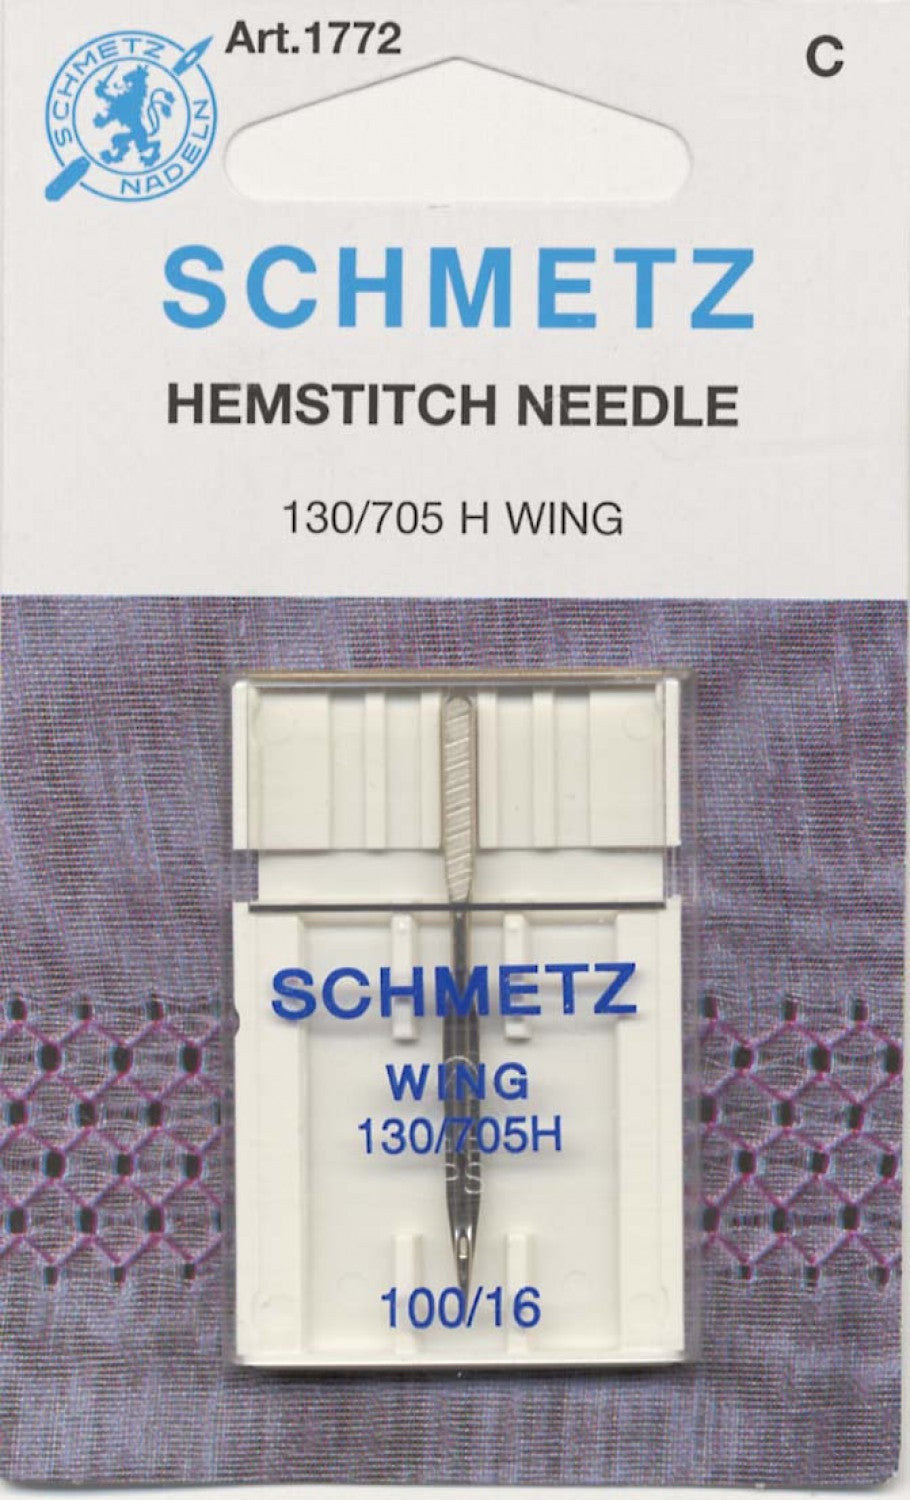 Schmetz Wing Needle - 100/16 - 1 Package of 5 Needles